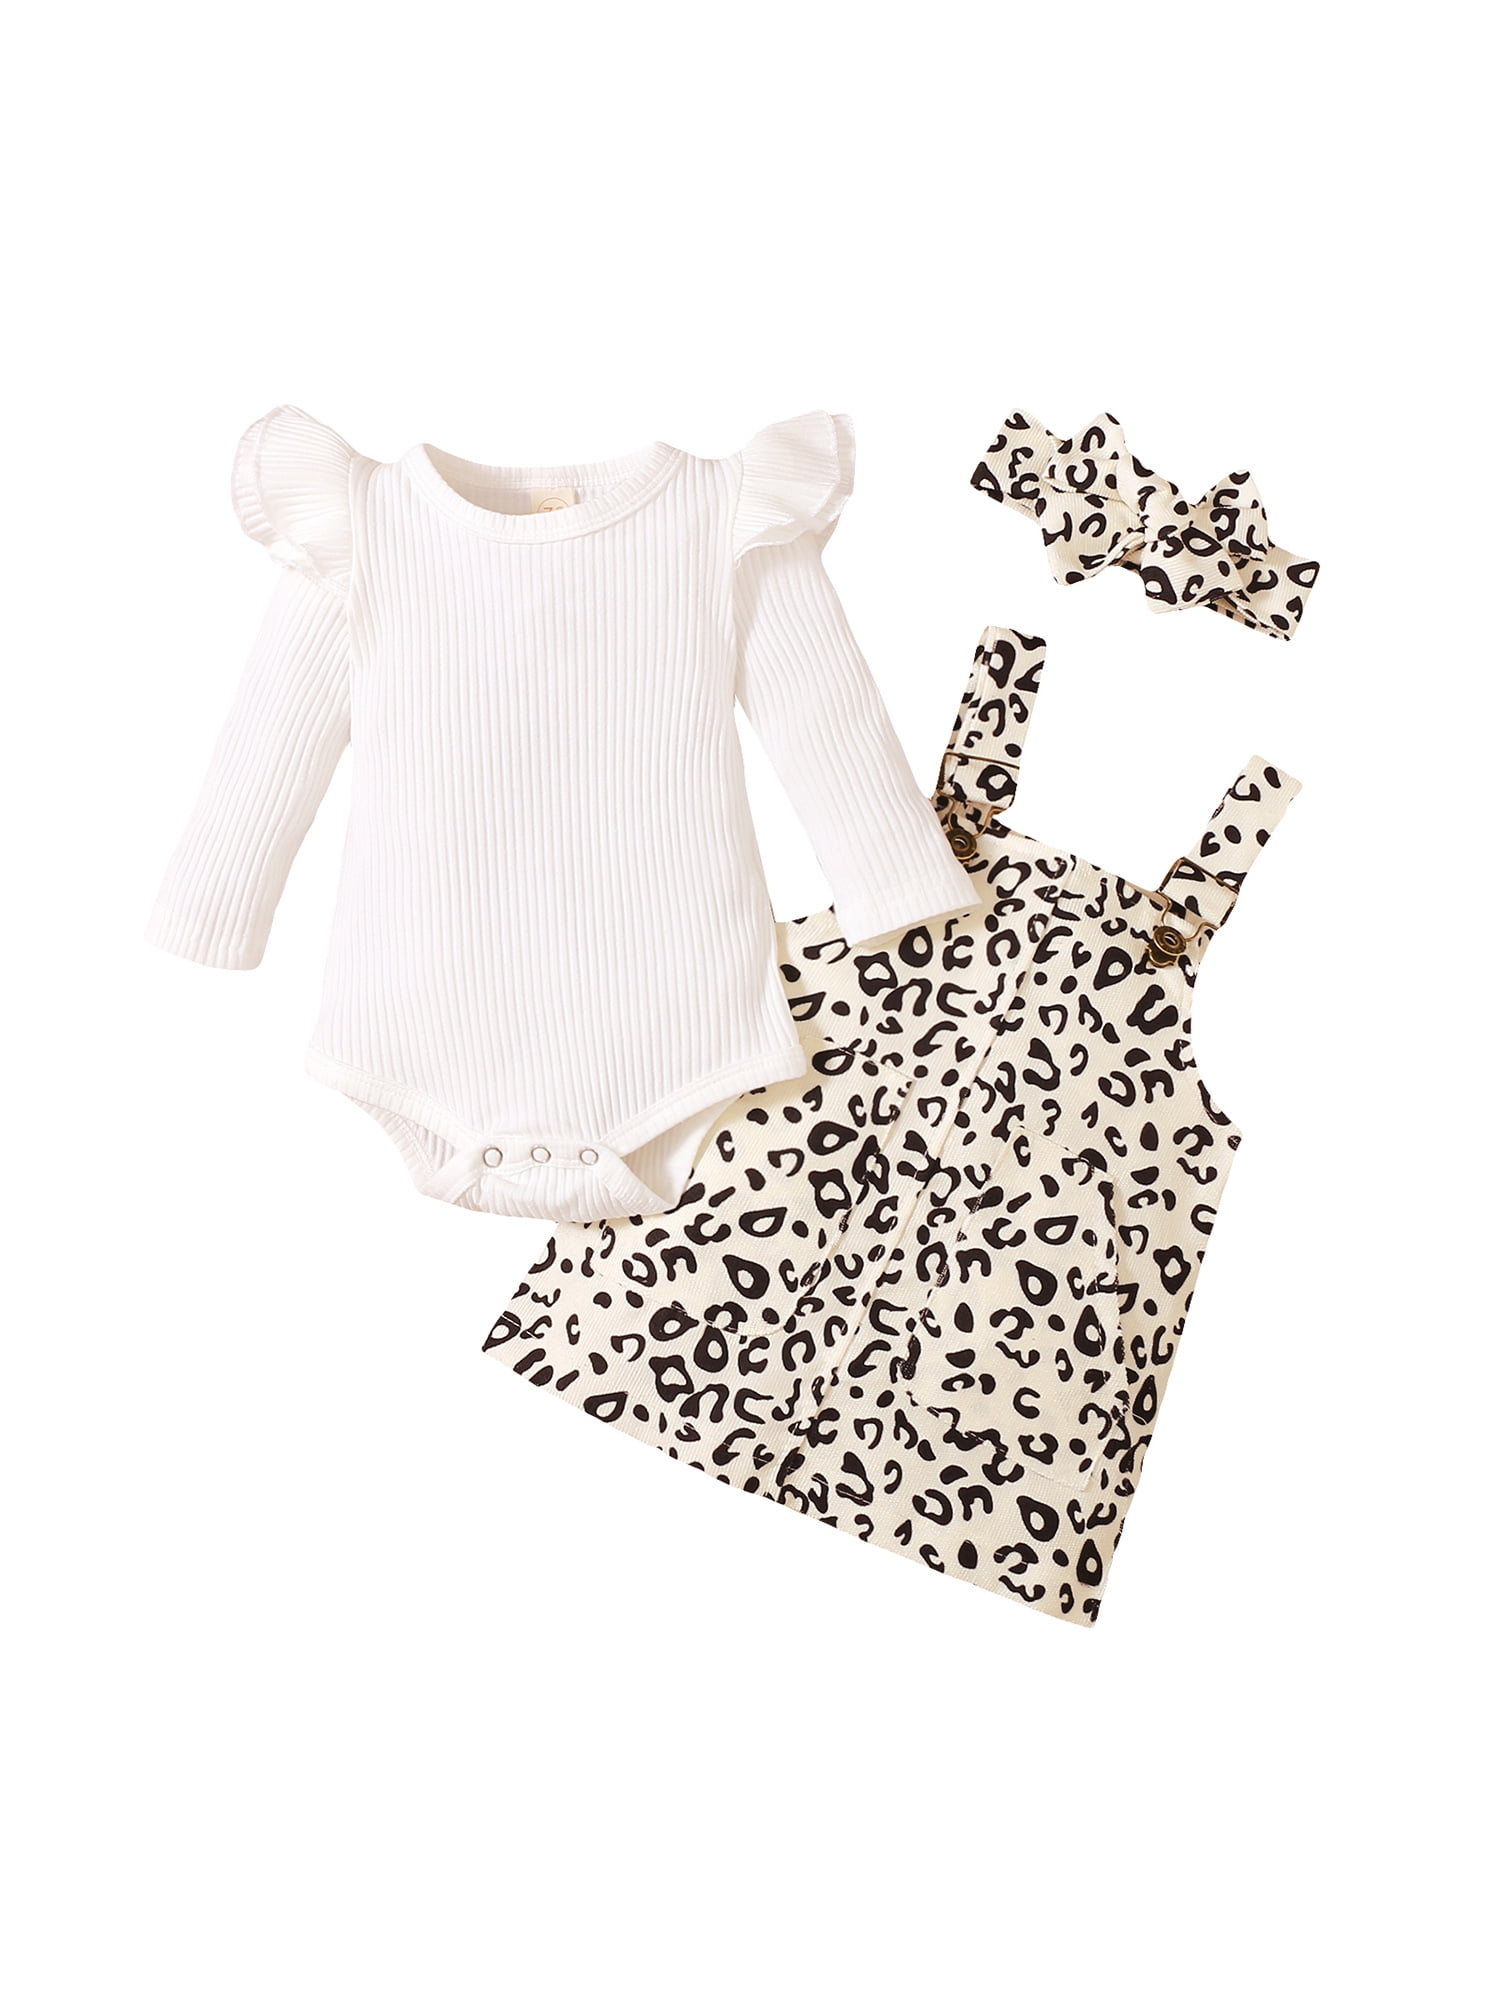 Baby Girl Spring Summer Outfits Toddler Leopard Cheetah Dress Suspender Skirt Overalls Leopard Suspender Skirt, 2-3T 